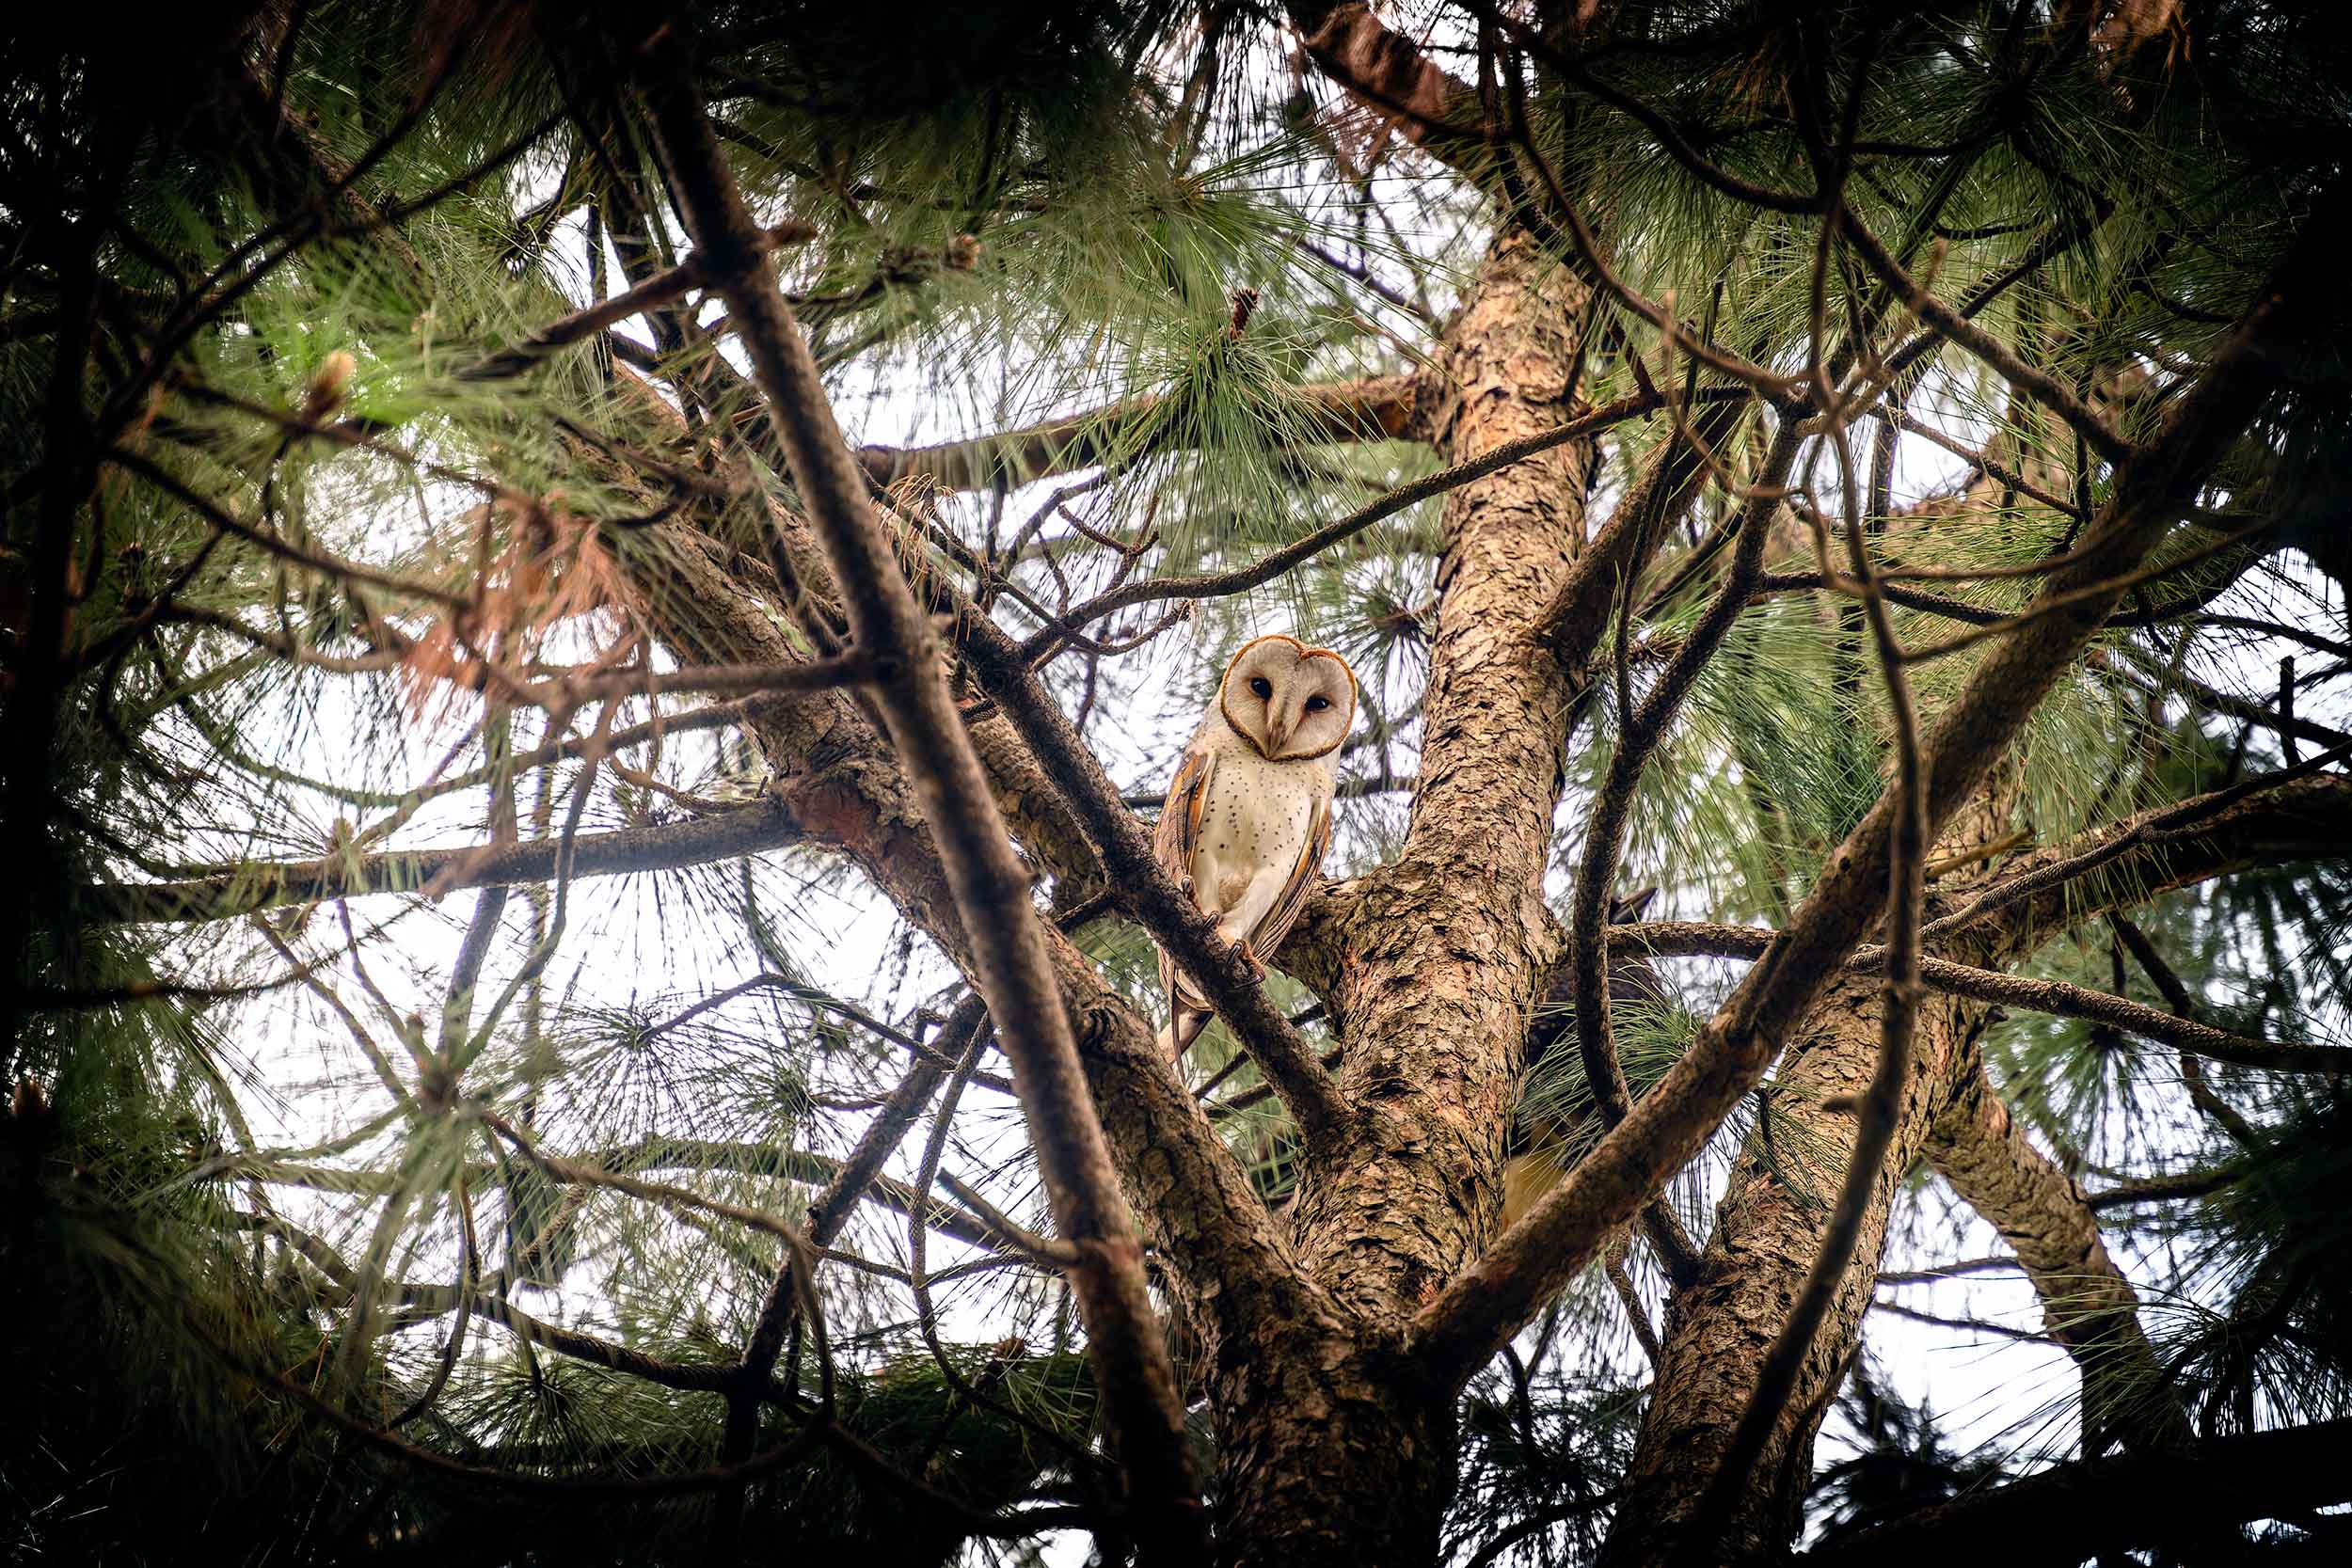 Eastern Barn Owl sitting in a Sheoak tree in deepest South Australia